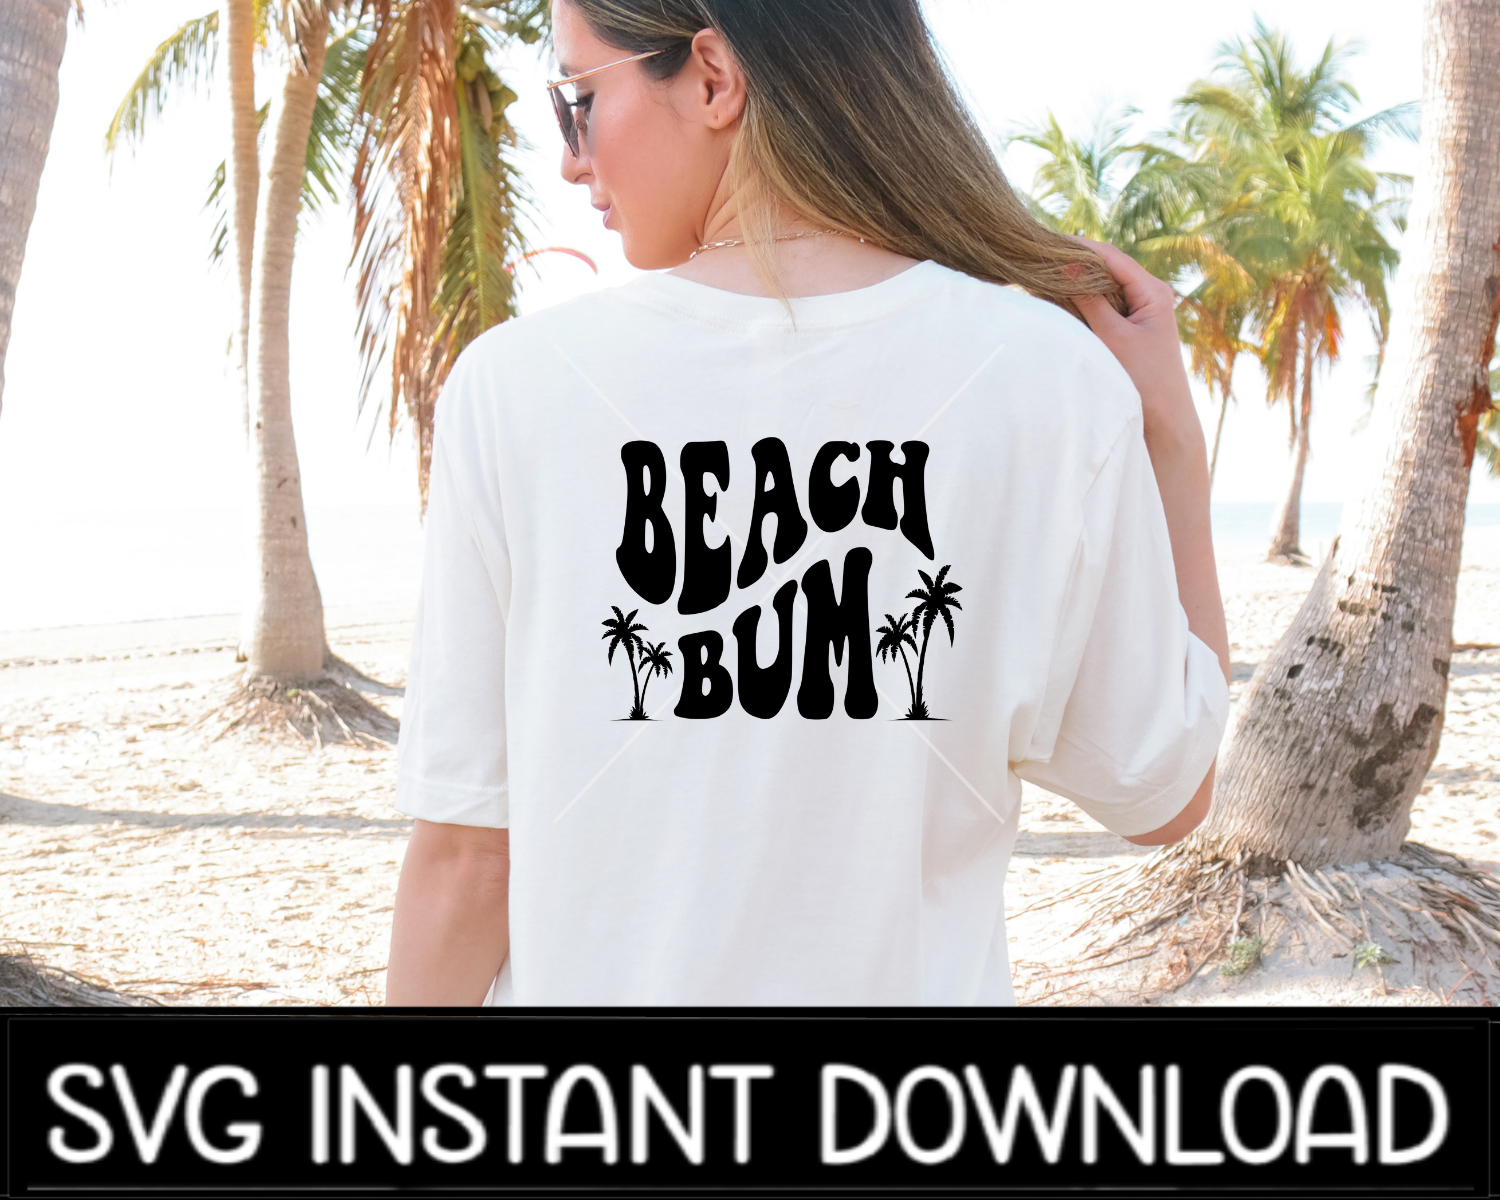 Beach Bum SVG, Summer SVG, Beach Bum Wavy Letters SvG Files Instant Download, Cricut Cut Files, Silhouette Cut Files, Download, Print